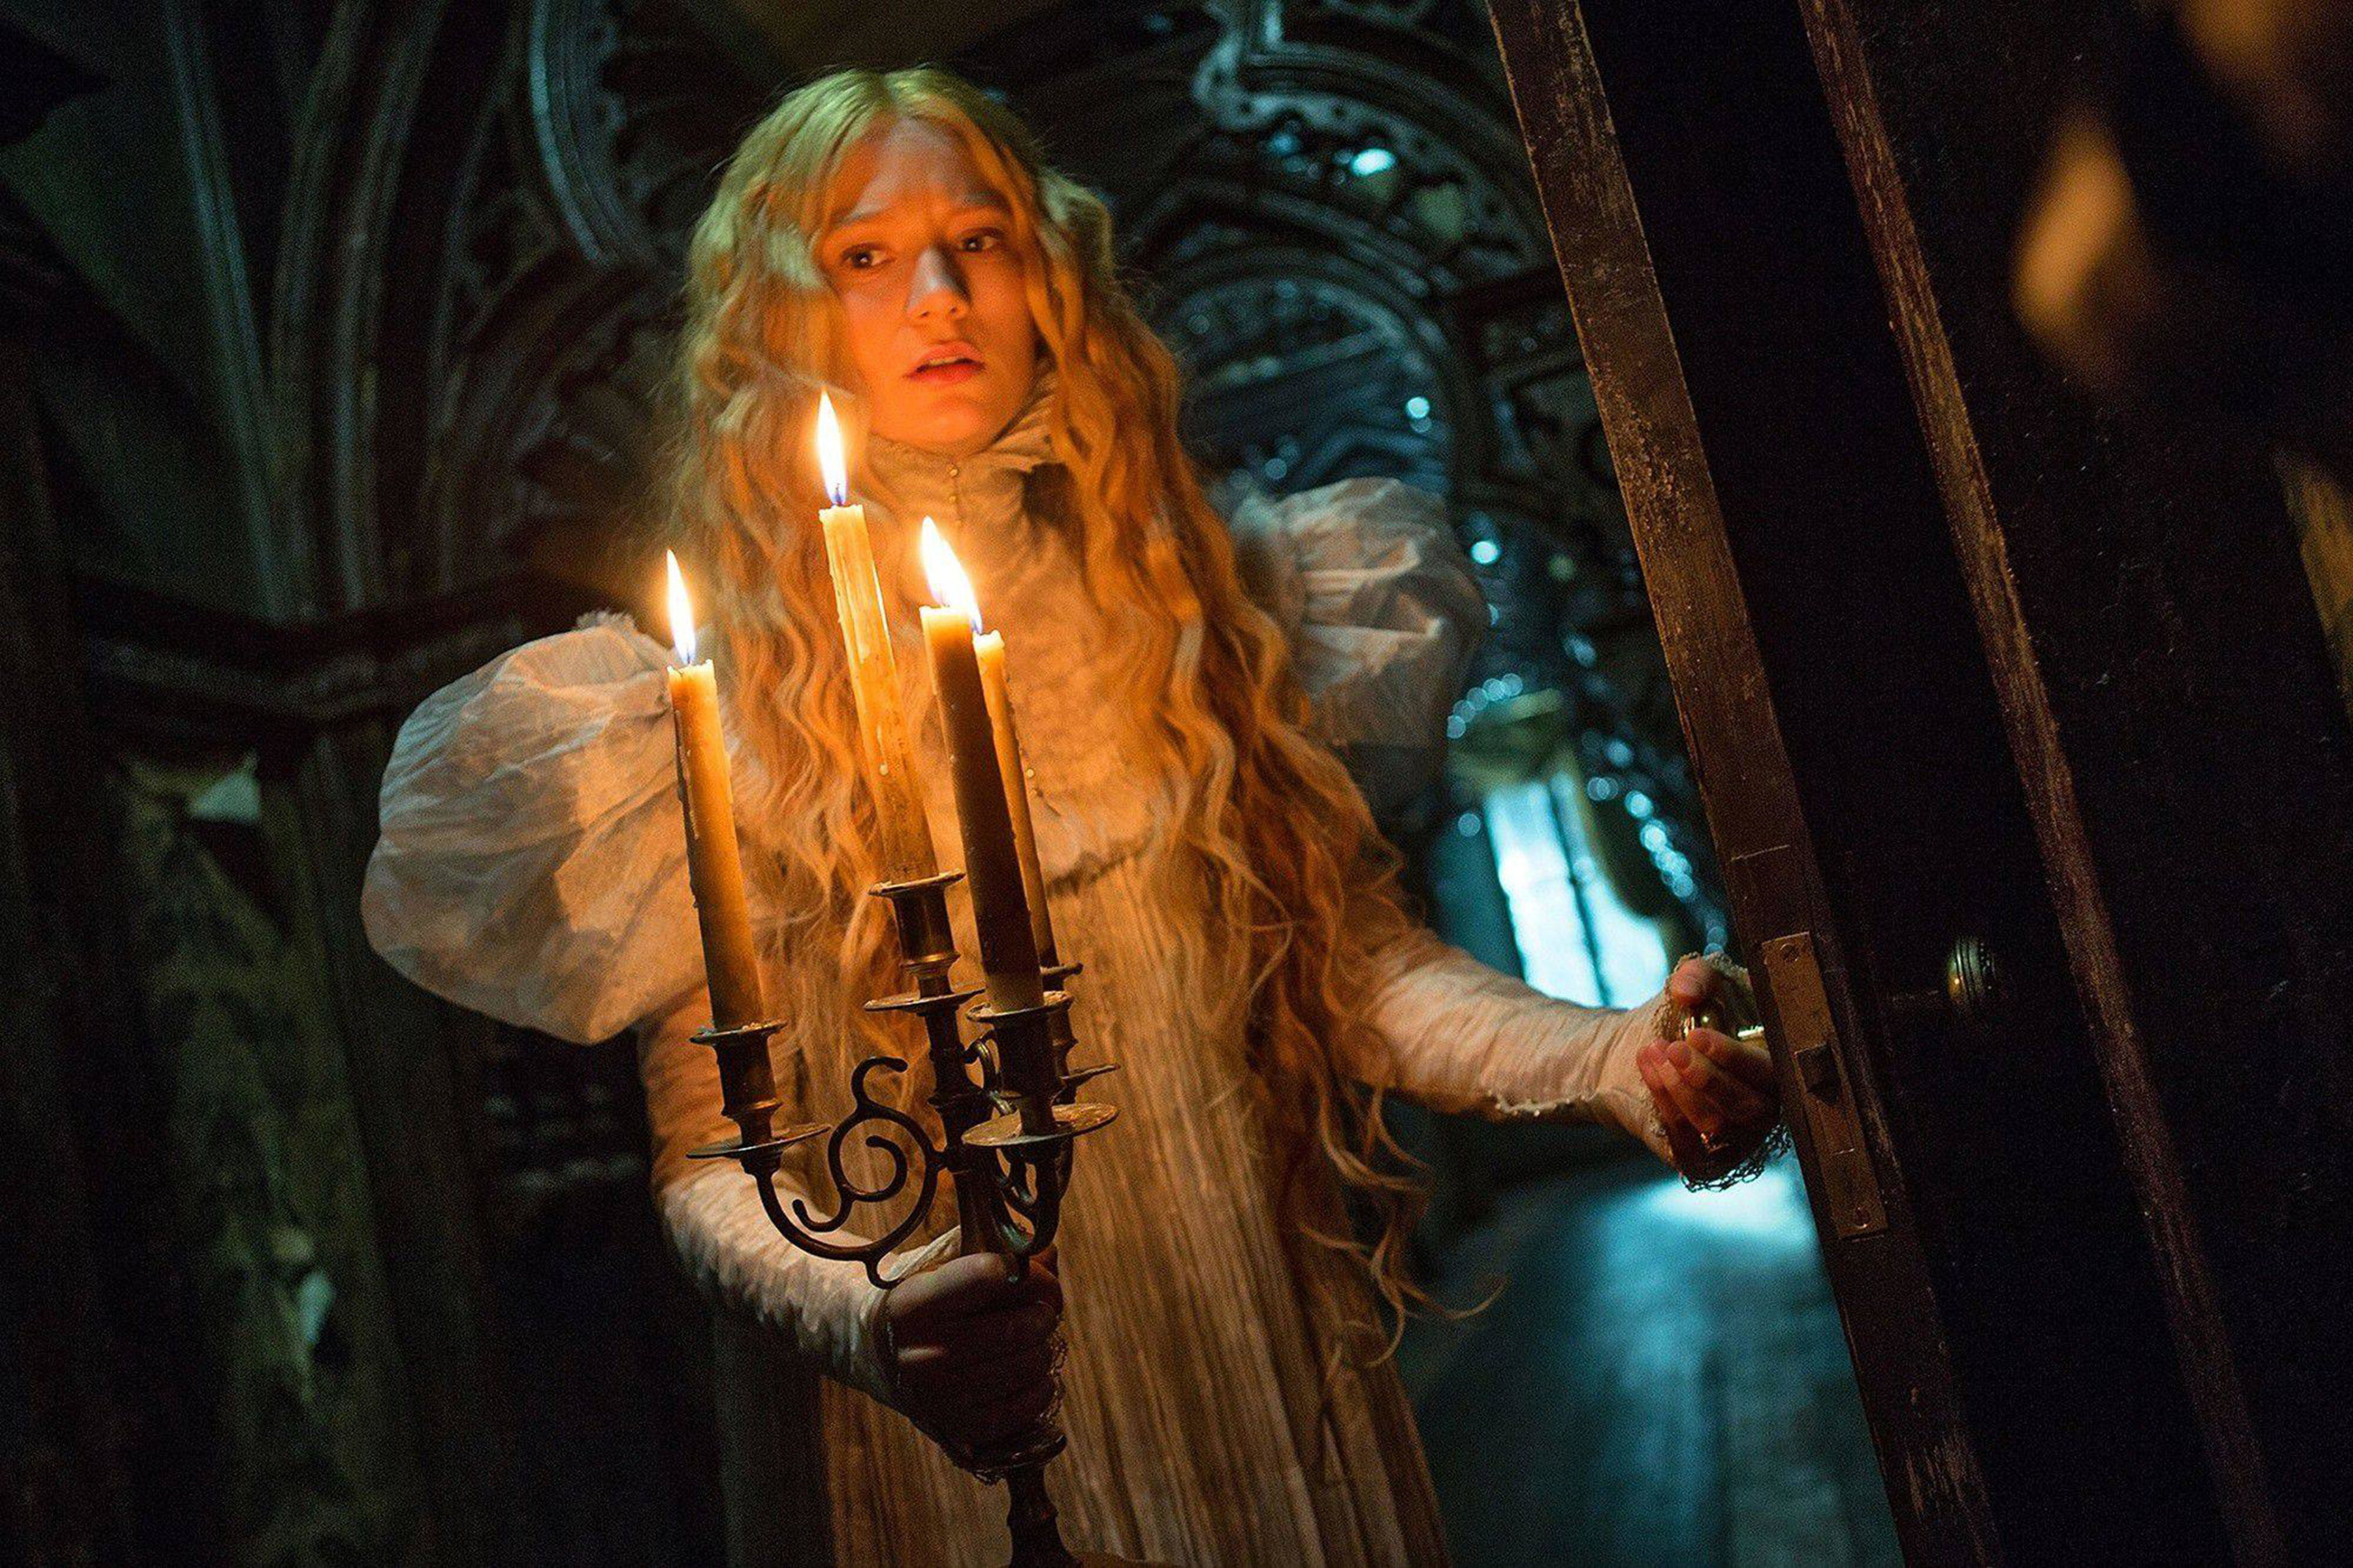 Mia Wasikowska walks down a dark mansion hallway with a candelabra